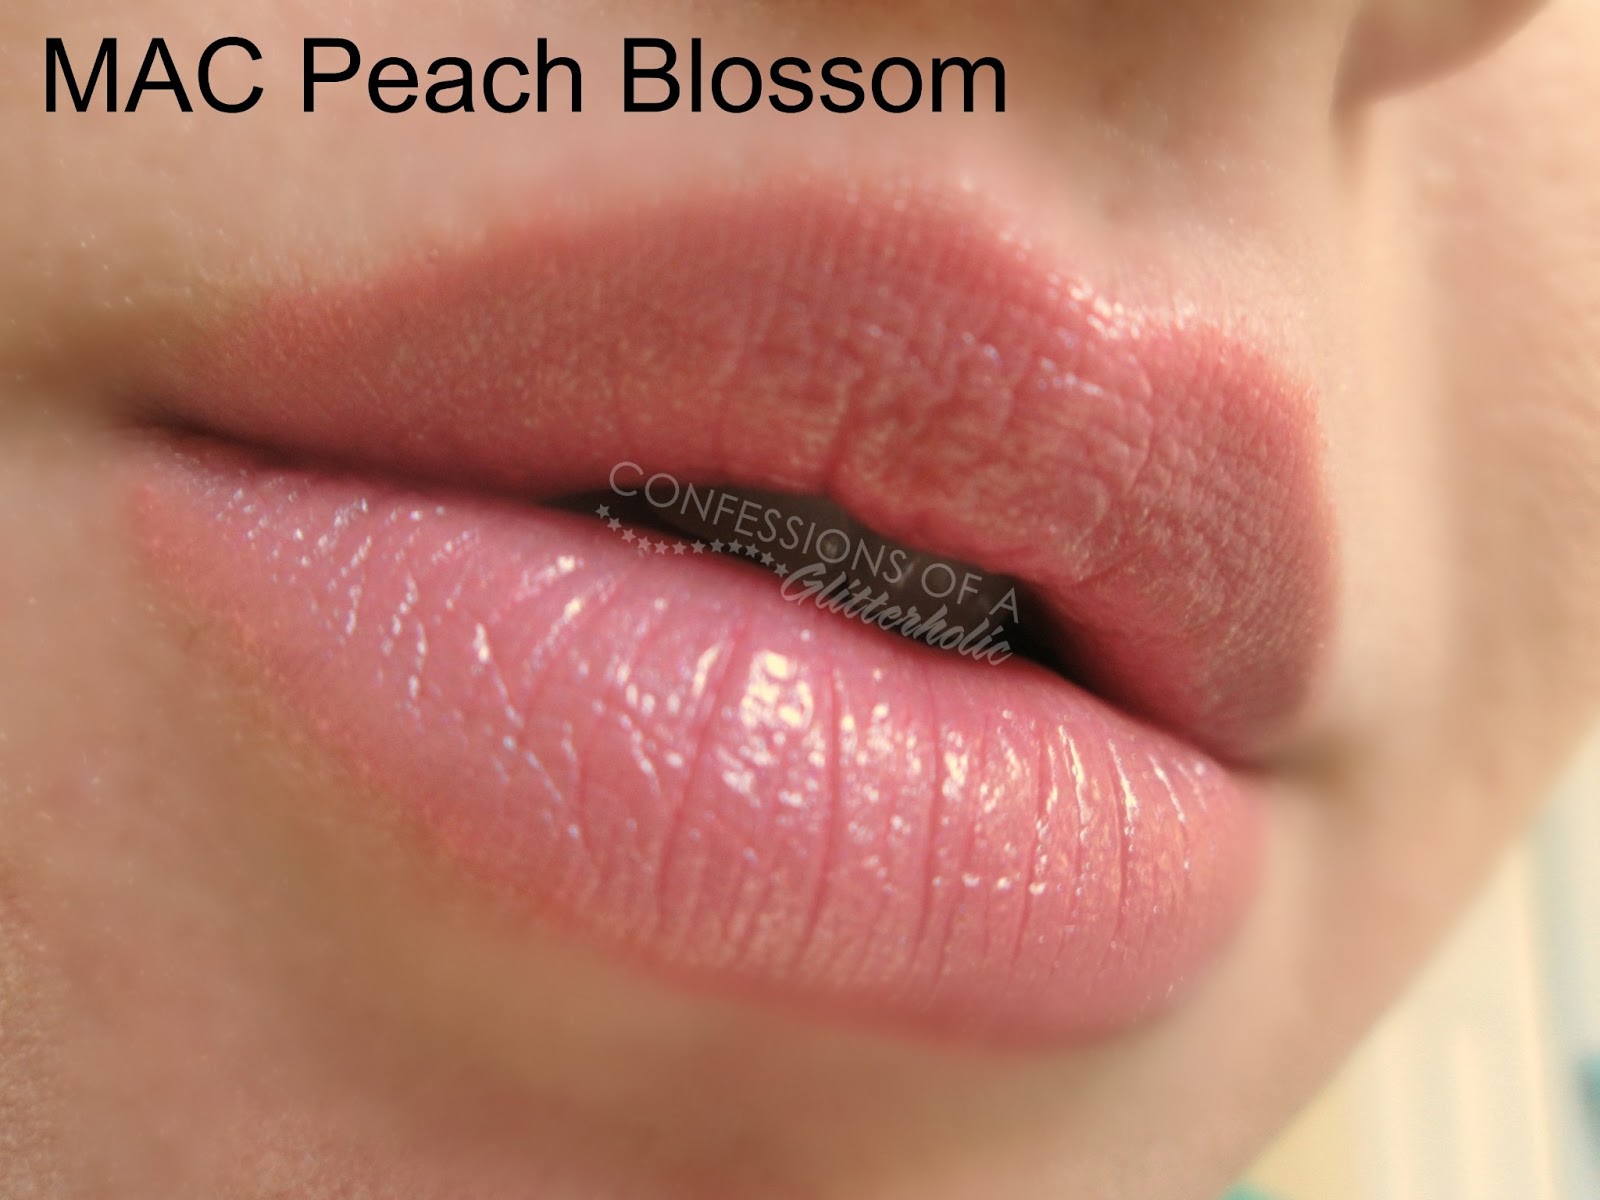 Peach blossom 4 карон. Помада Mac 216 Peach Blossom. Mac 812 Peach Blossom помада. Mac Peach Blossom помада. Mac Lipstick Cremesheen Peach Blossom.